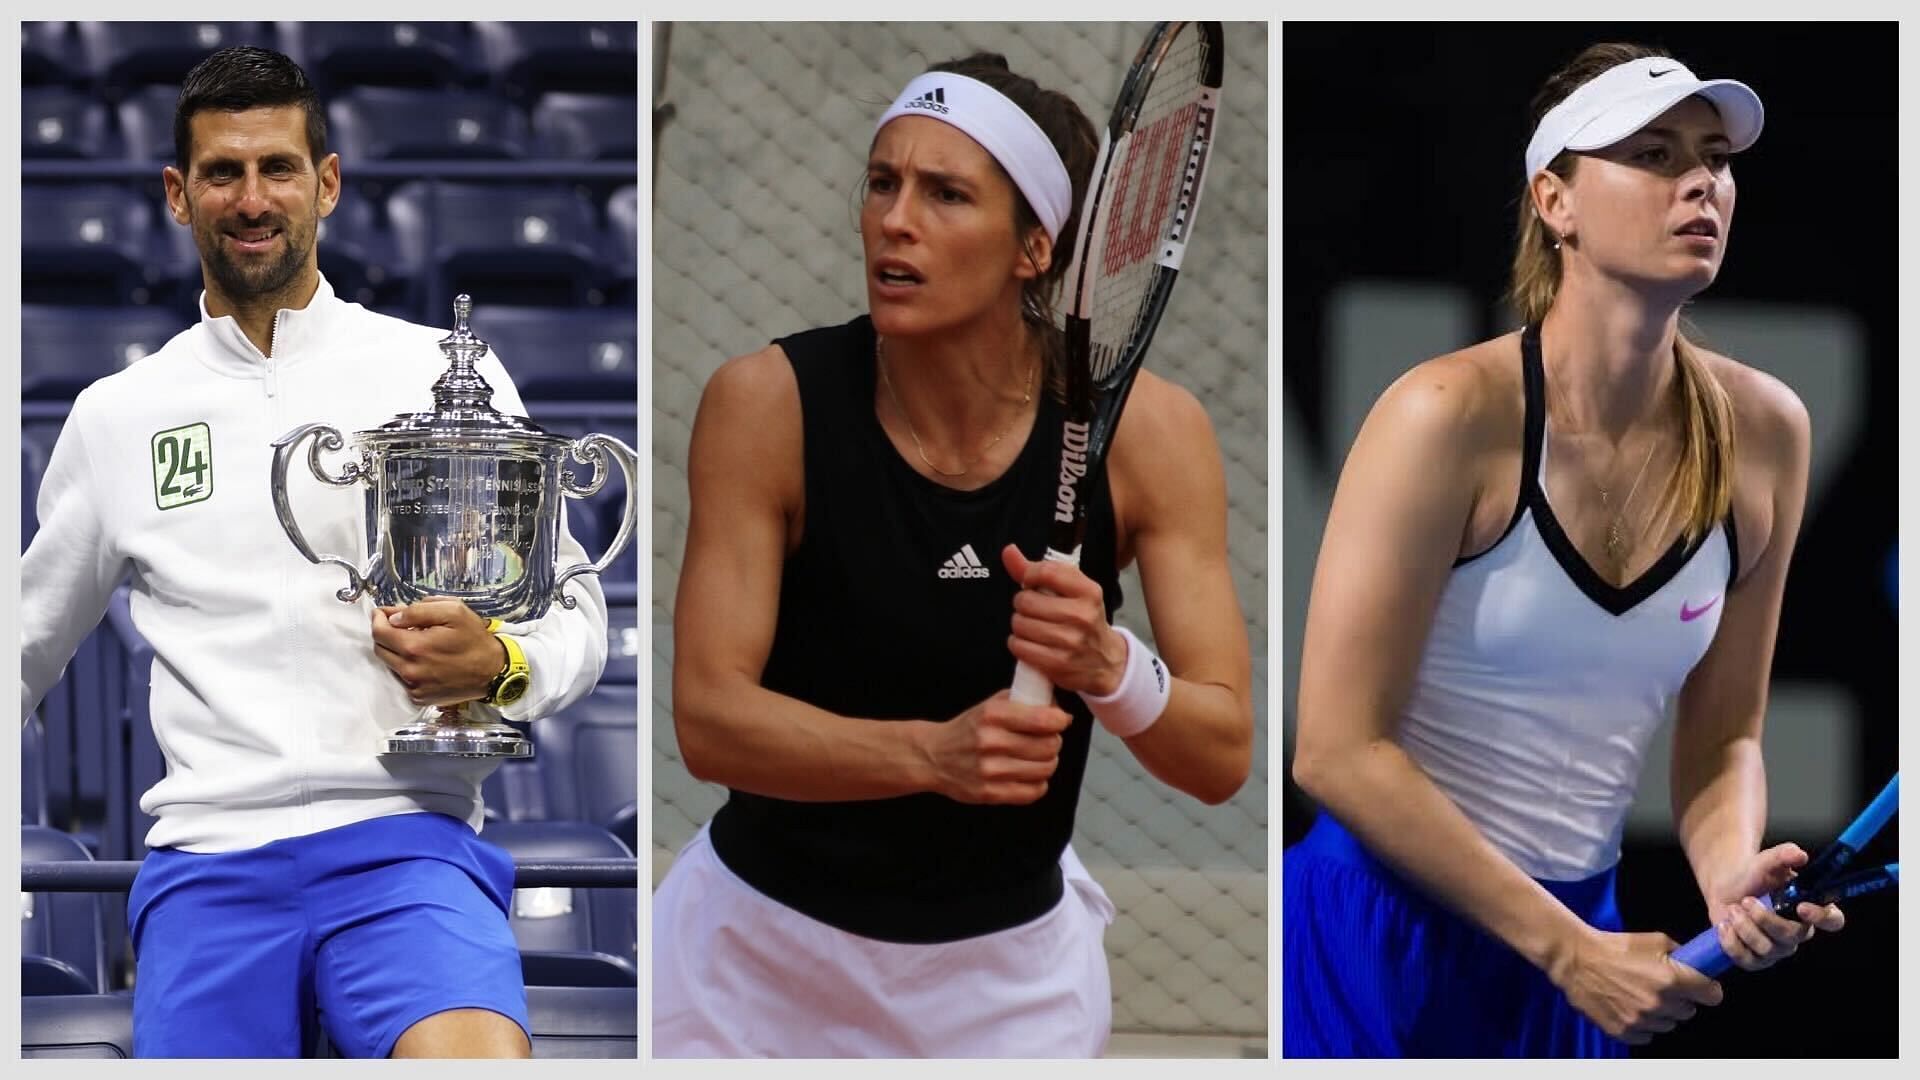 Andrea Petkovic shares her birth year with Novak Djokovic and Maria Sharapova